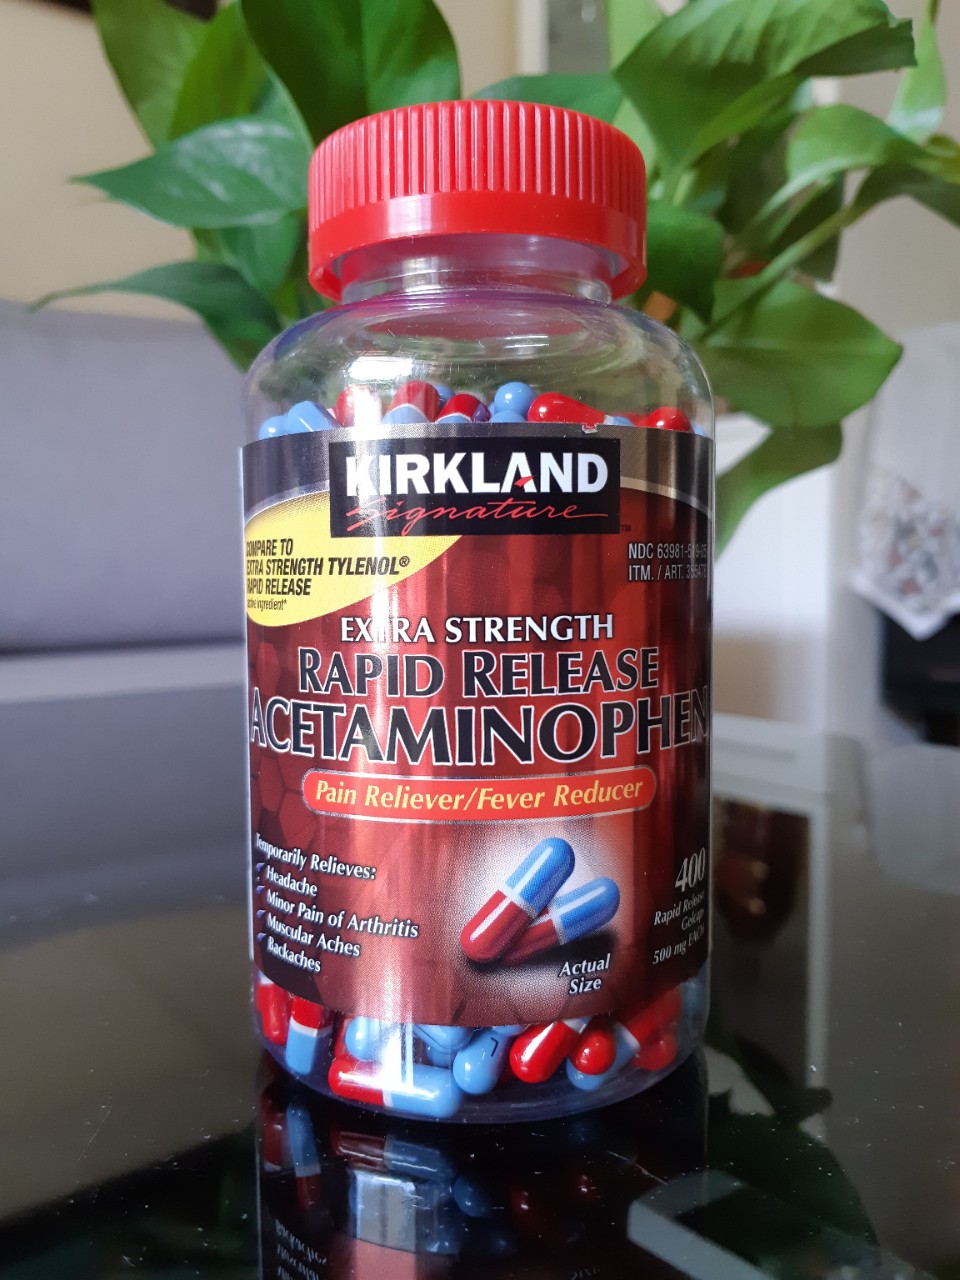 Viên uống giảm đau Kirkland Extra Strength Acetaminophen 500mg.